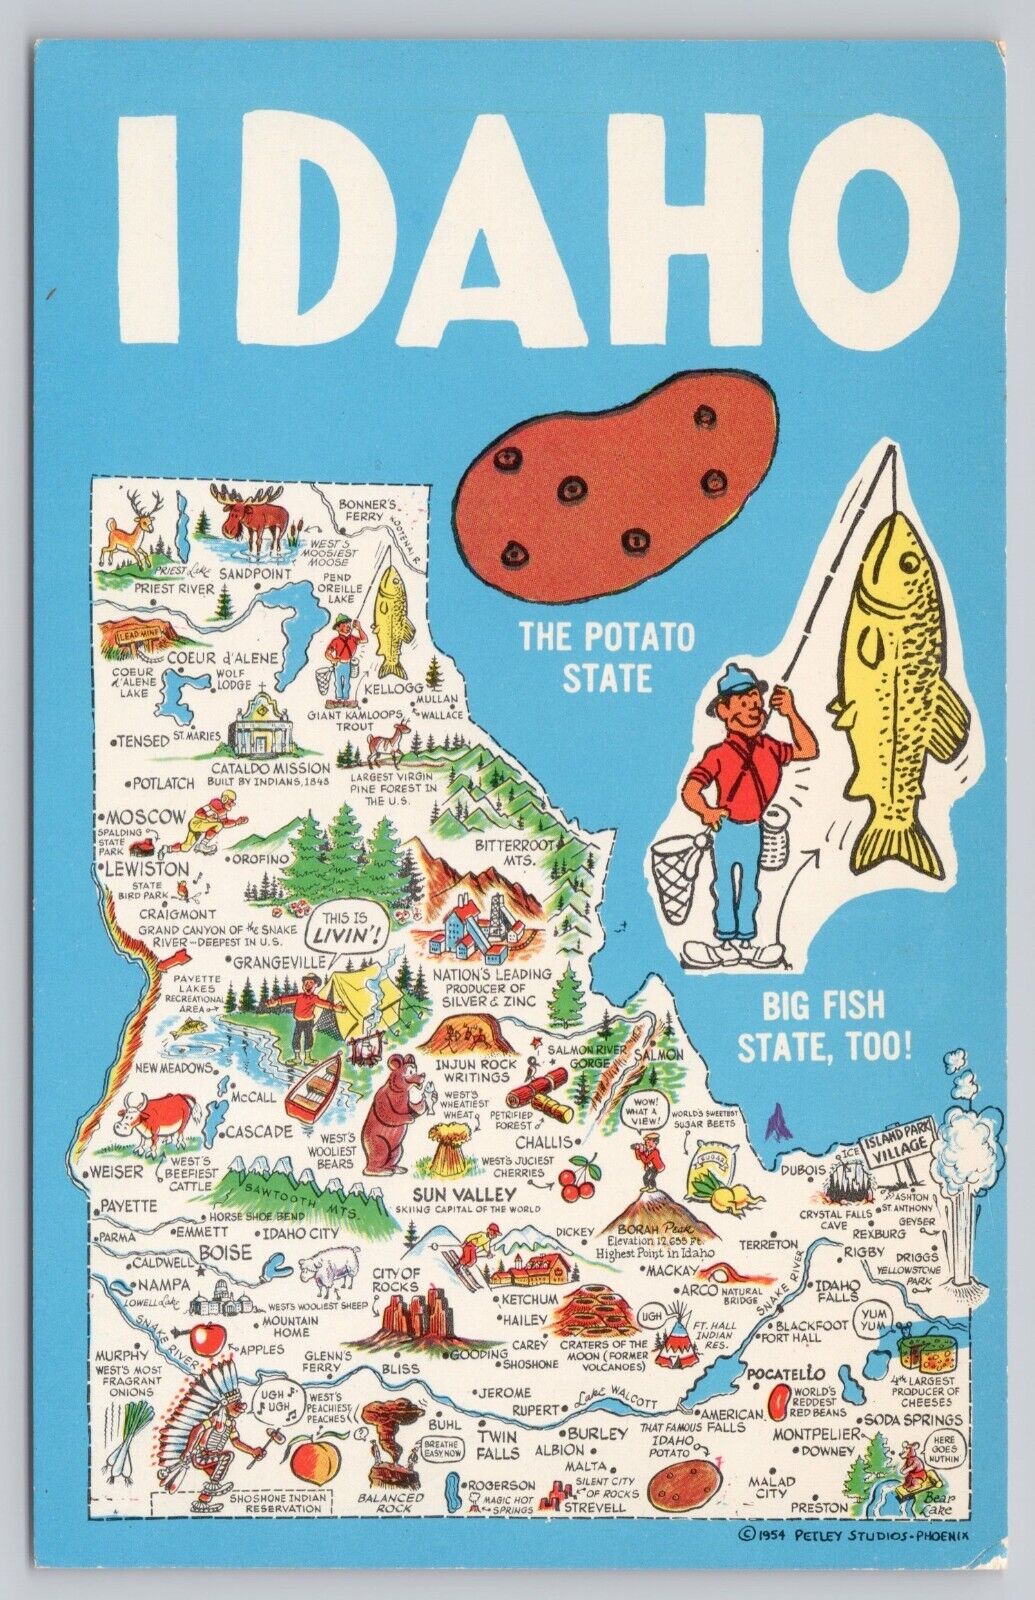 Idaho State Pictoral Map, Landmarks & Attractions, Vintage Postcard